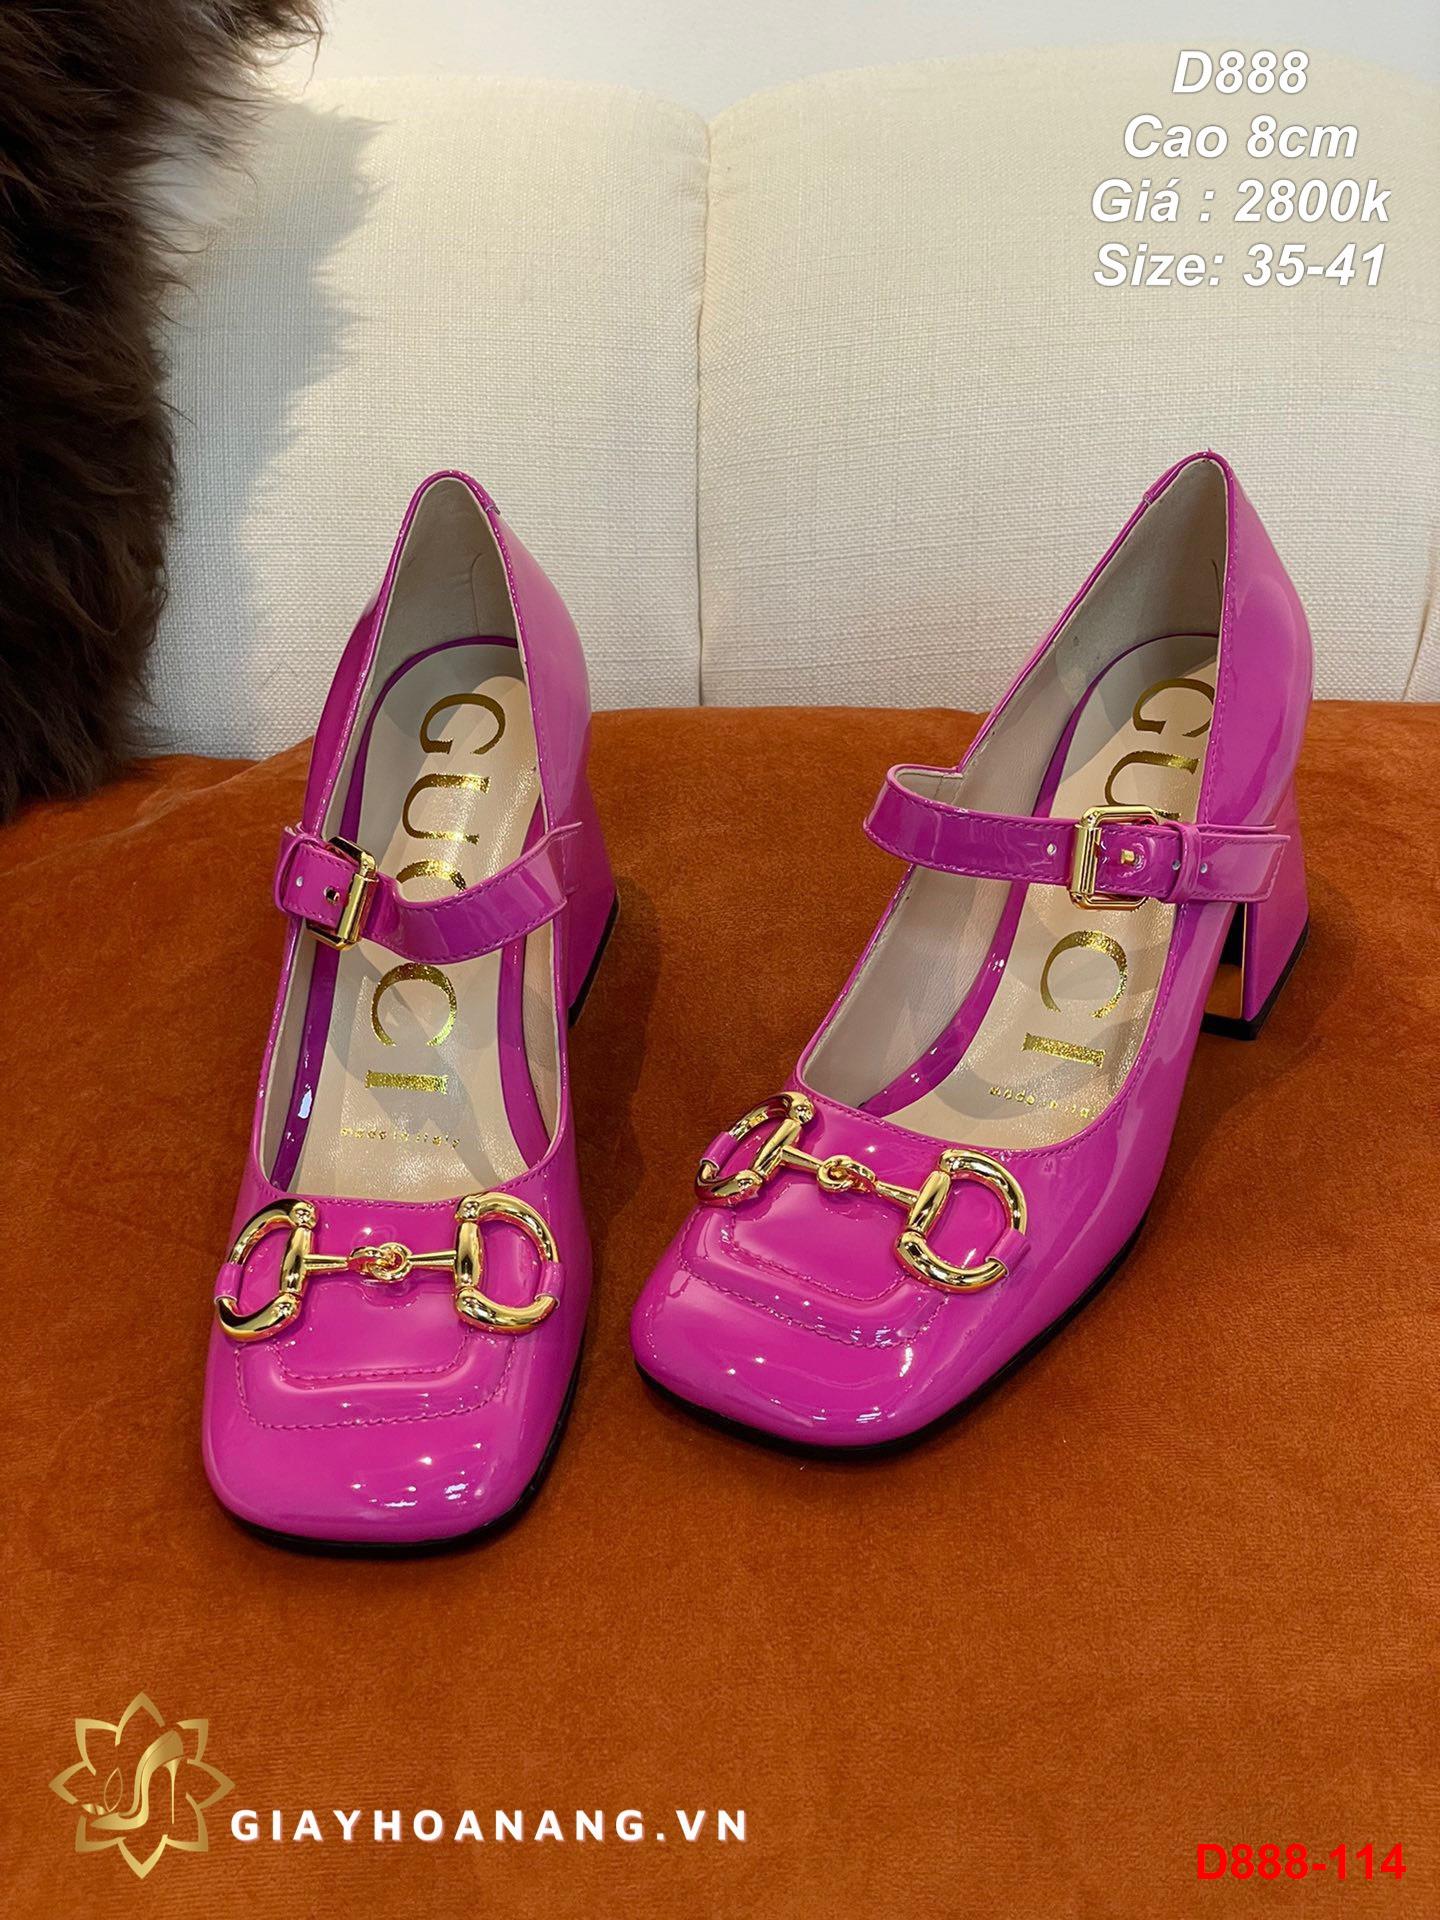 D888-114 Gucci sandal cao 8cm siêu cấp